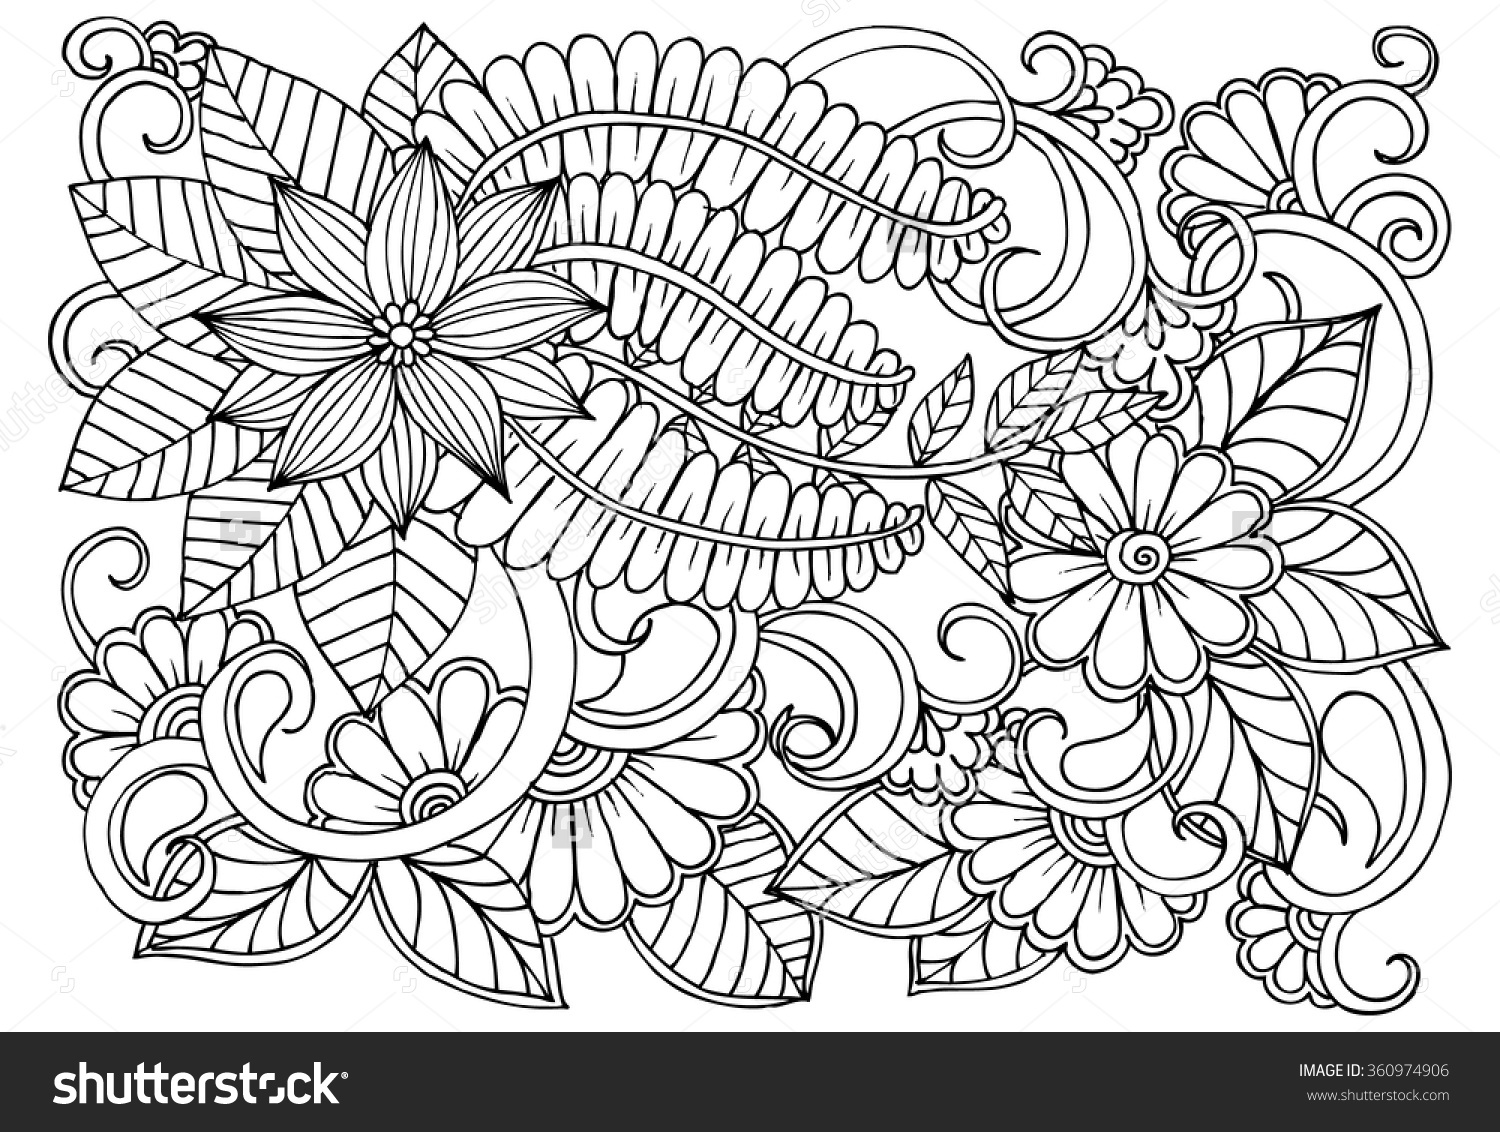 Carpet Of Leaves coloring #9, Download drawings